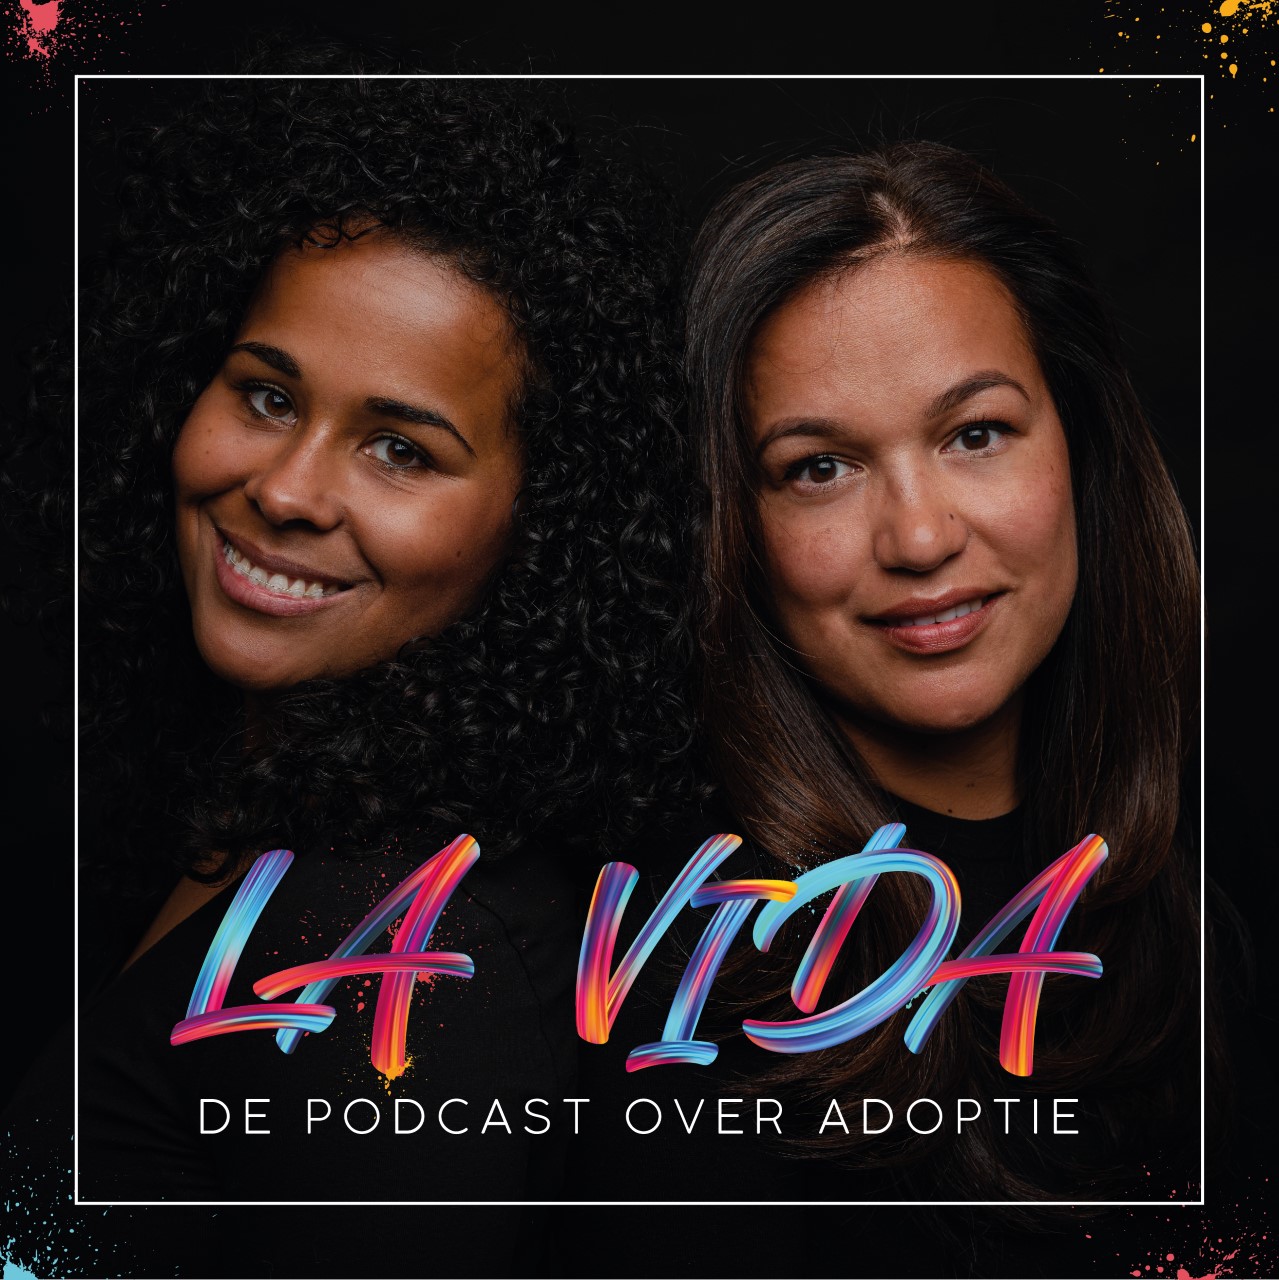 La Vida de podcast over adoptie